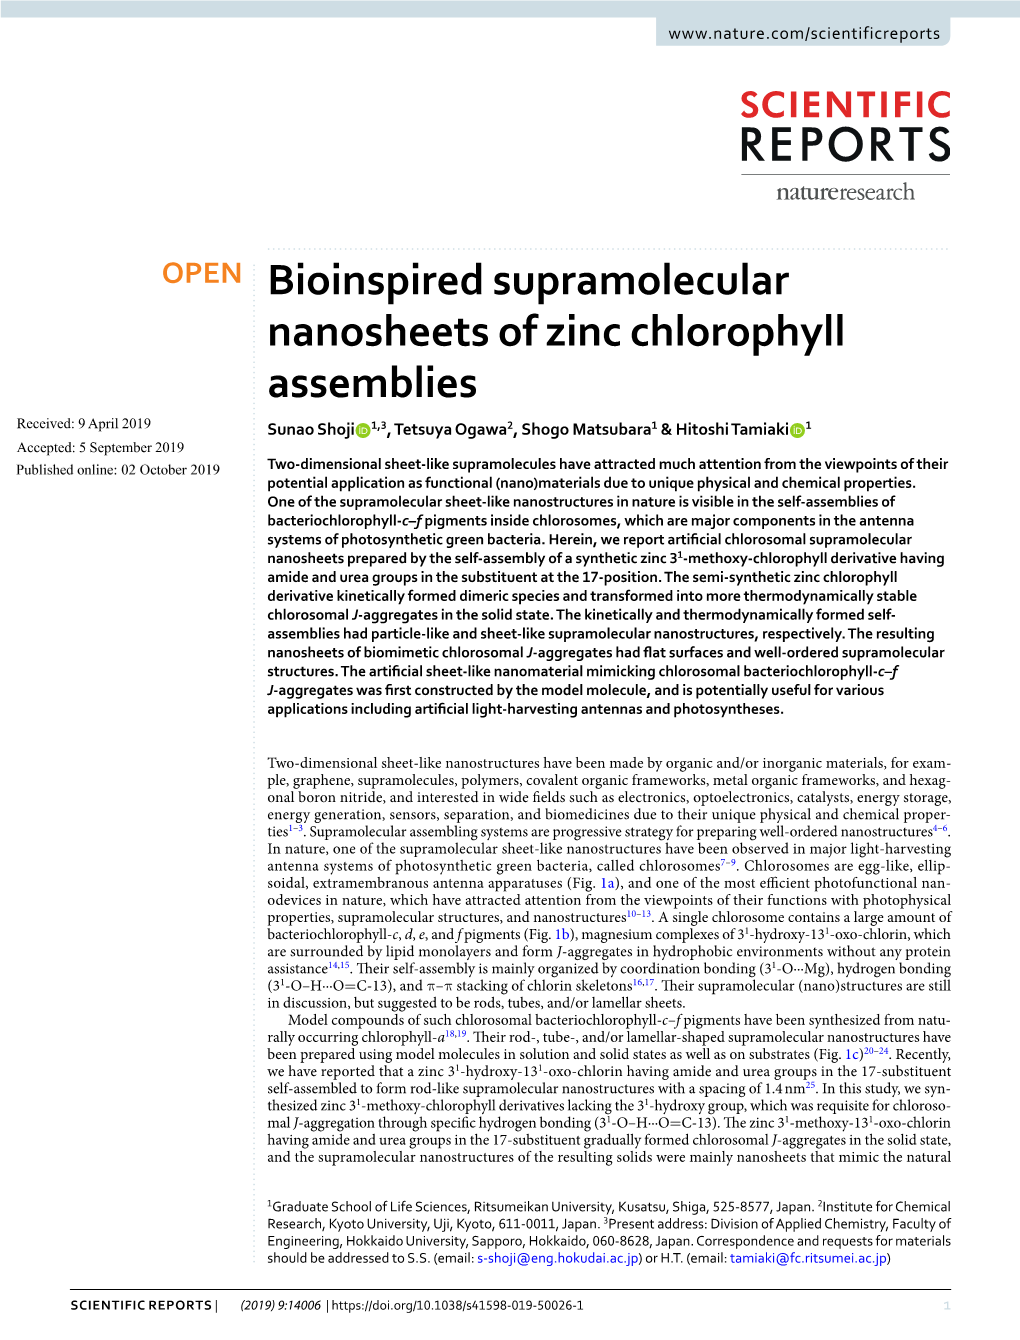 Bioinspired Supramolecular Nanosheets of Zinc Chlorophyll